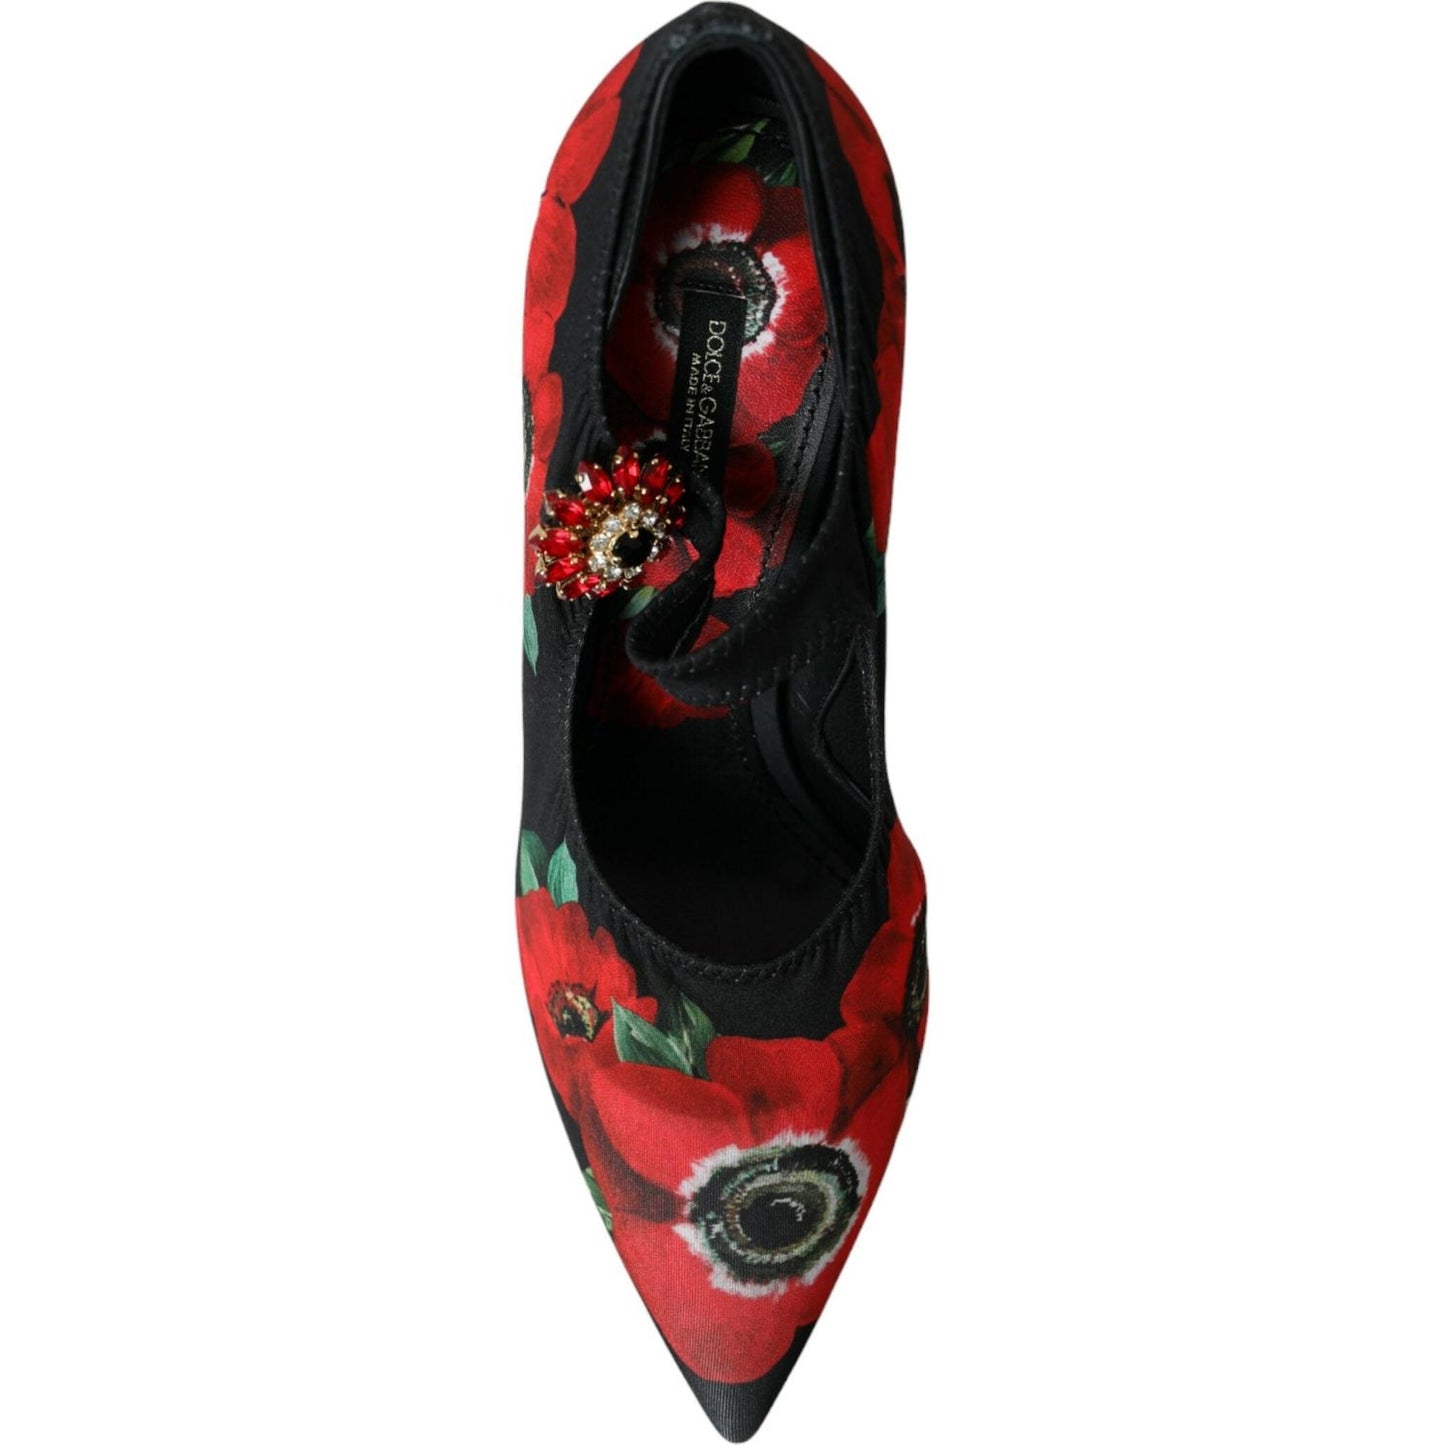 Dolce & Gabbana Black Floral Crystal Mary Jane Pumps Shoes black-floral-crystal-mary-jane-pumps-shoes